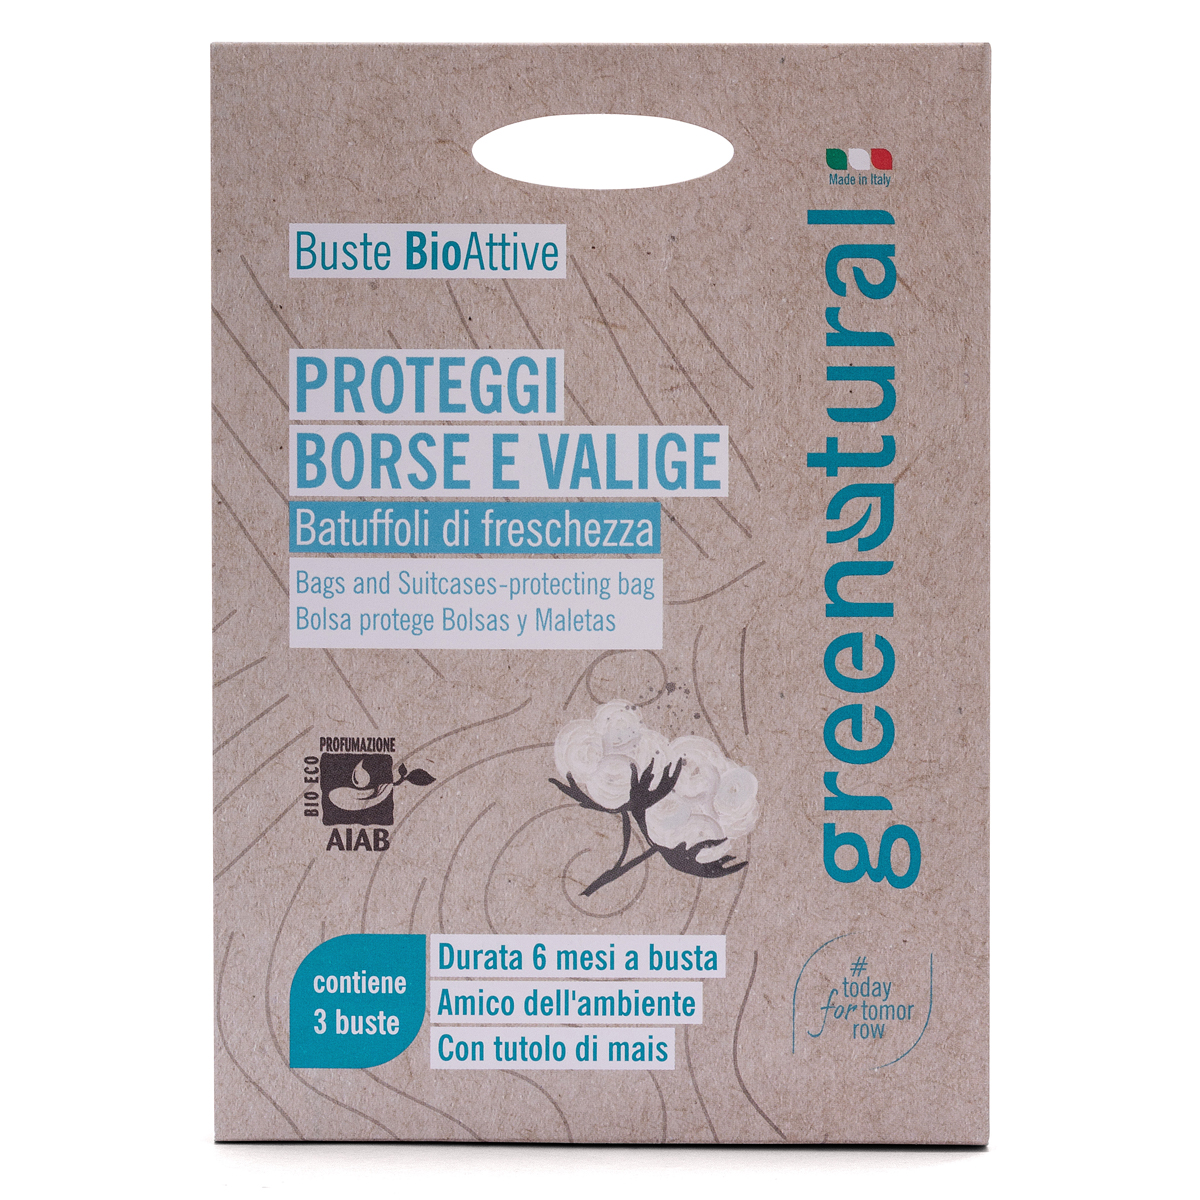 Buste Bioattive  Proteggi borse e valigie - 3x10g, , large